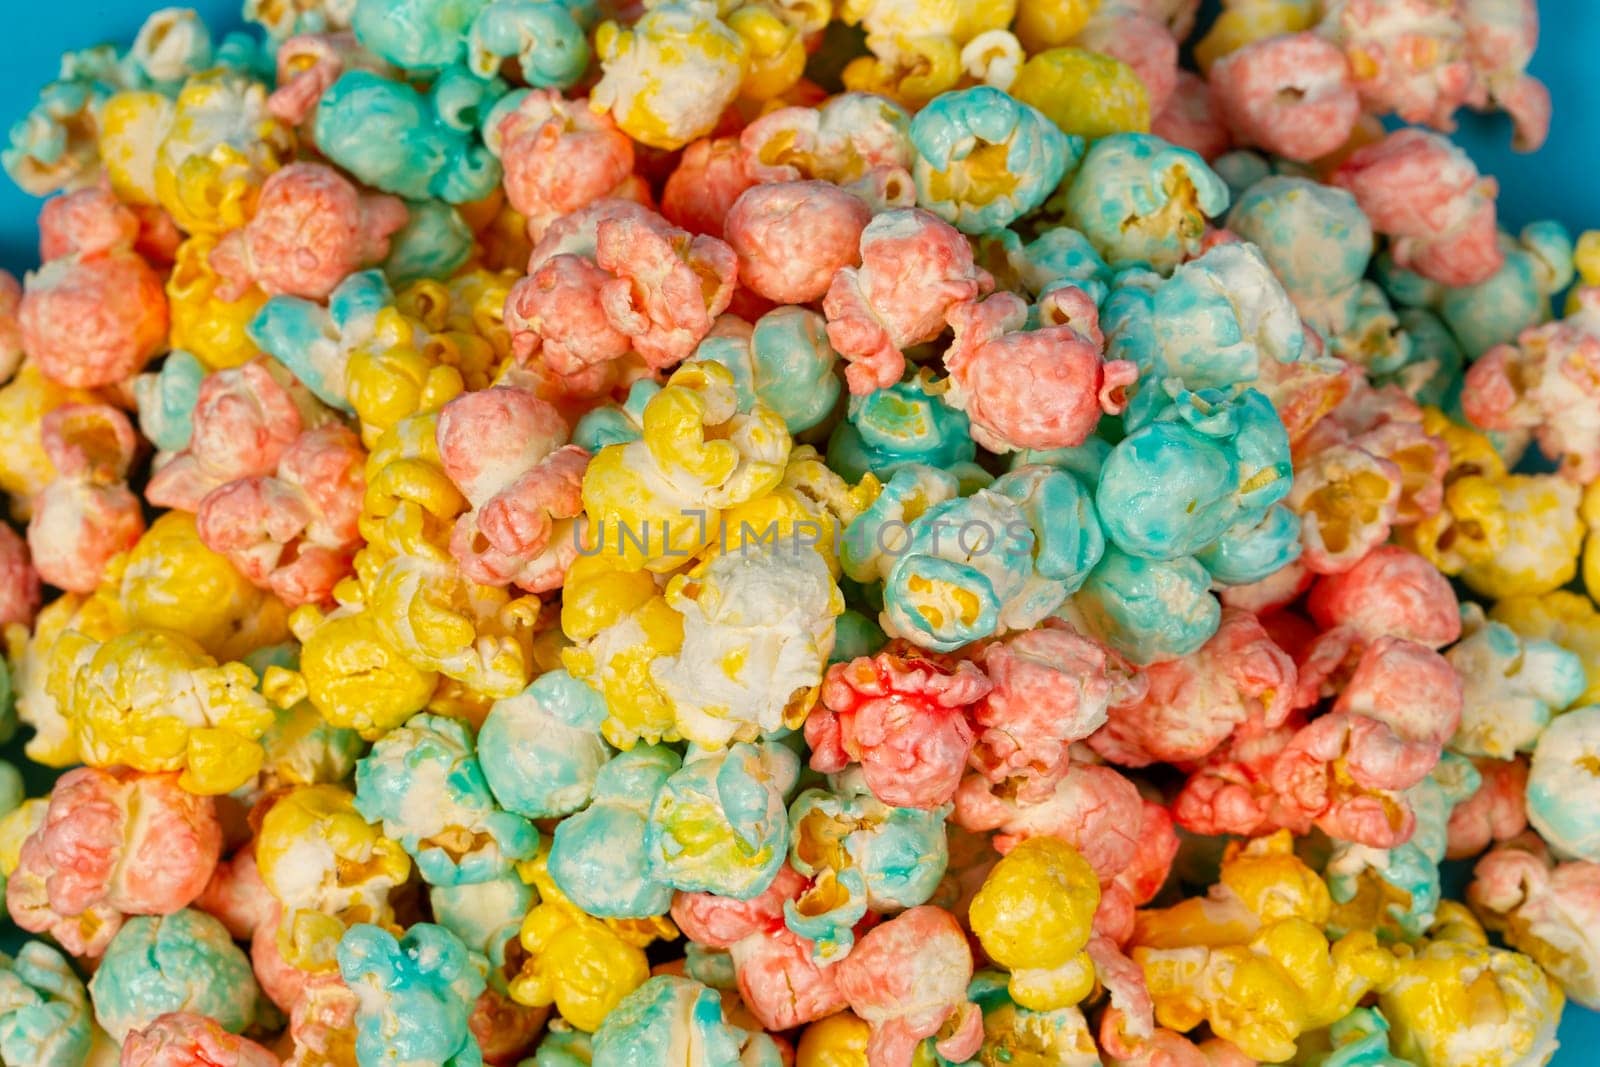 Multicolored popcorn close-up. Colorful beautiful sweet dessert.